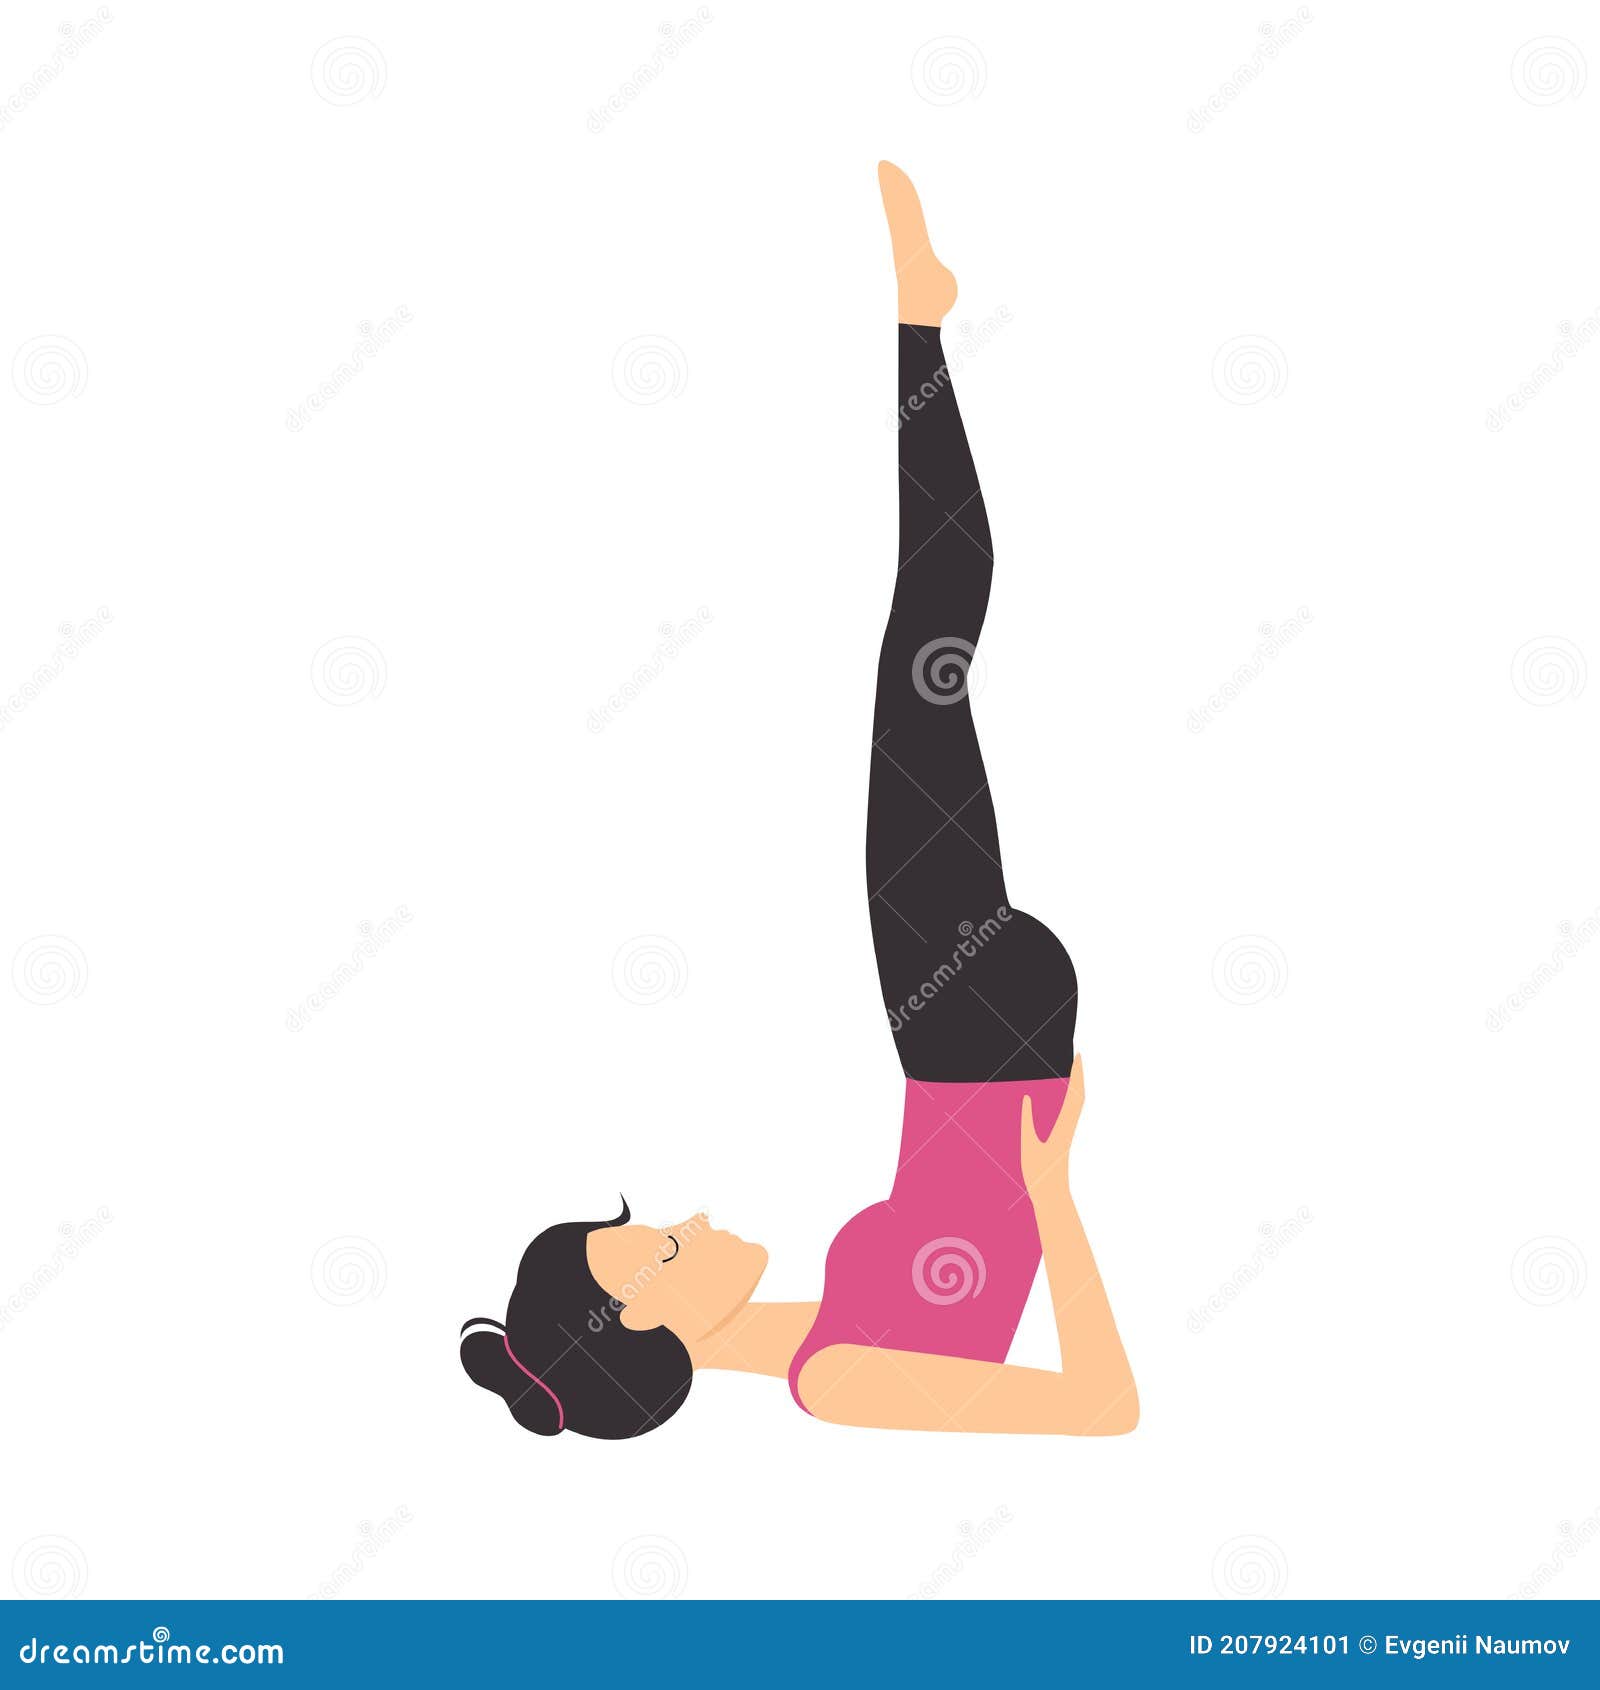 Free Vectors | Yoga | Woman doing shoulderstand pose